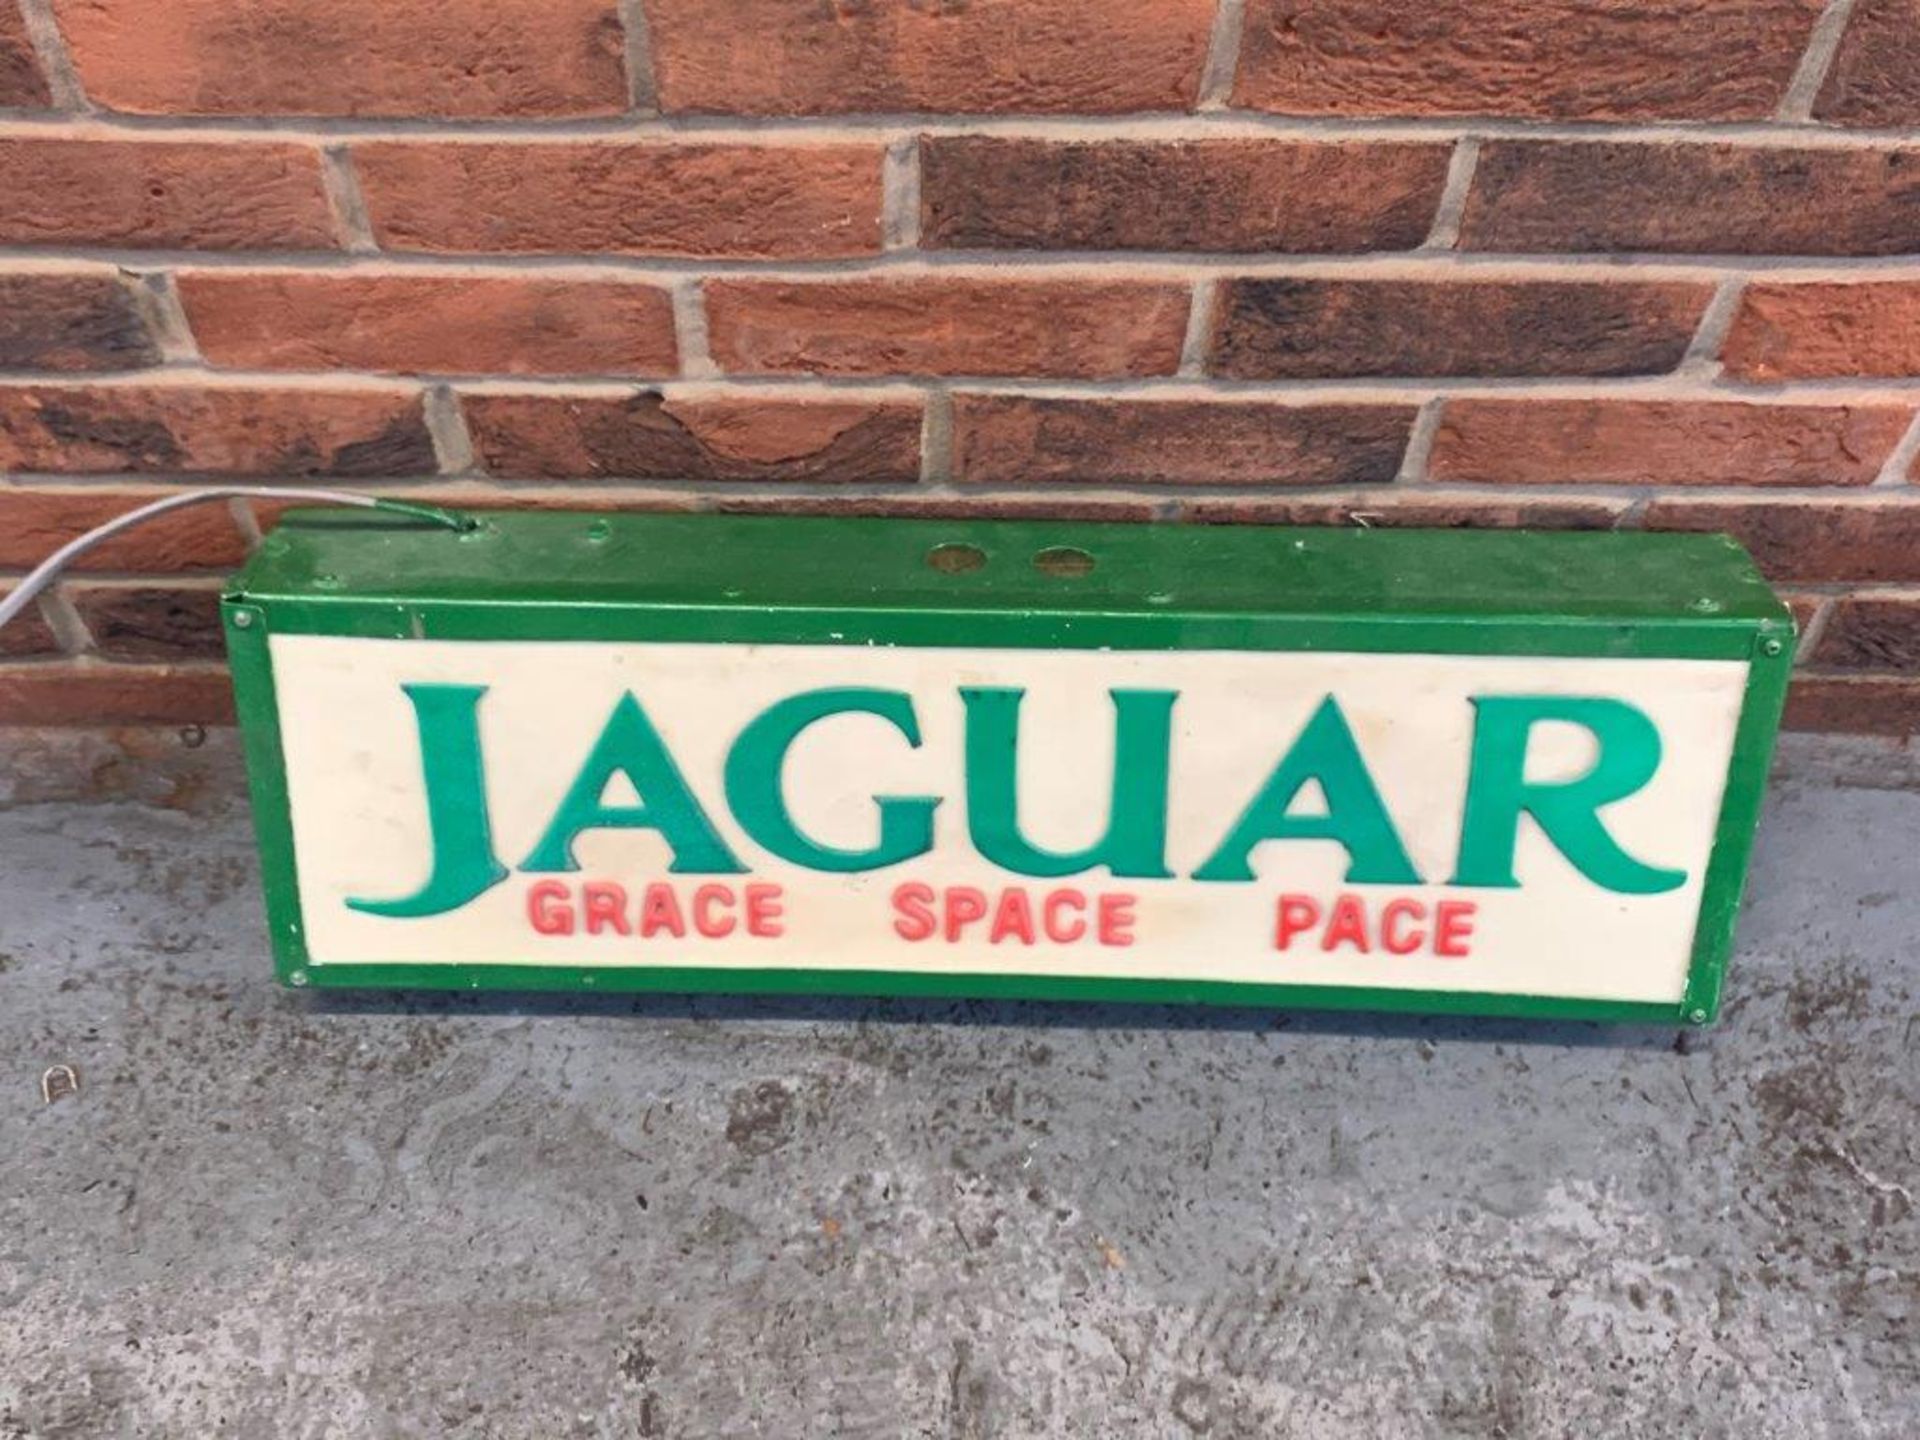 Jaguar 'Grace, Space and Pace' Light Box - Image 2 of 3